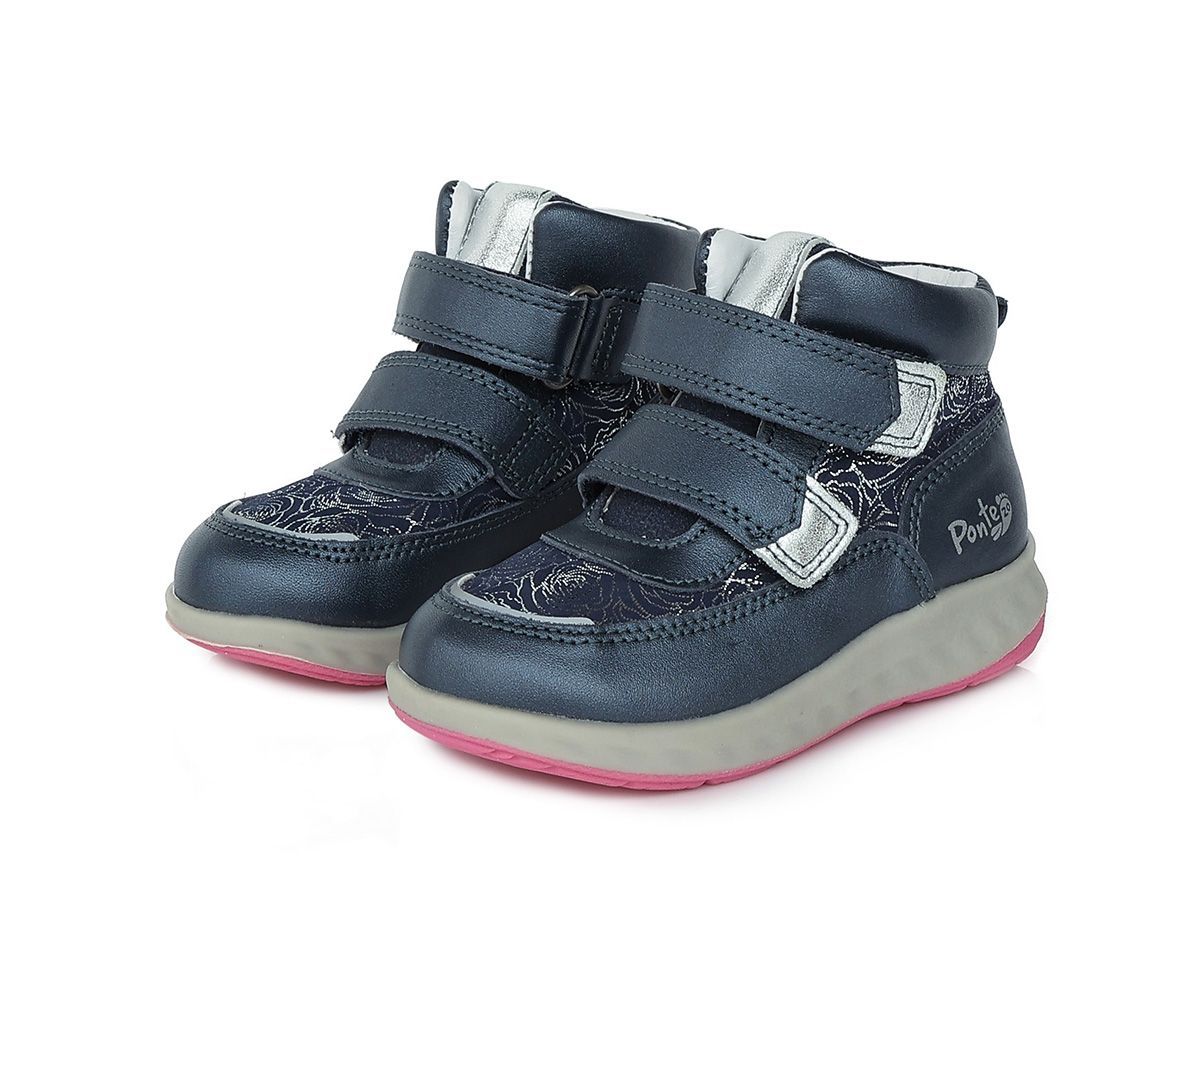 PONTE20 átmeneti bőr cipő DA06-3-993CL ROYAL BLUE 28-33 méretben